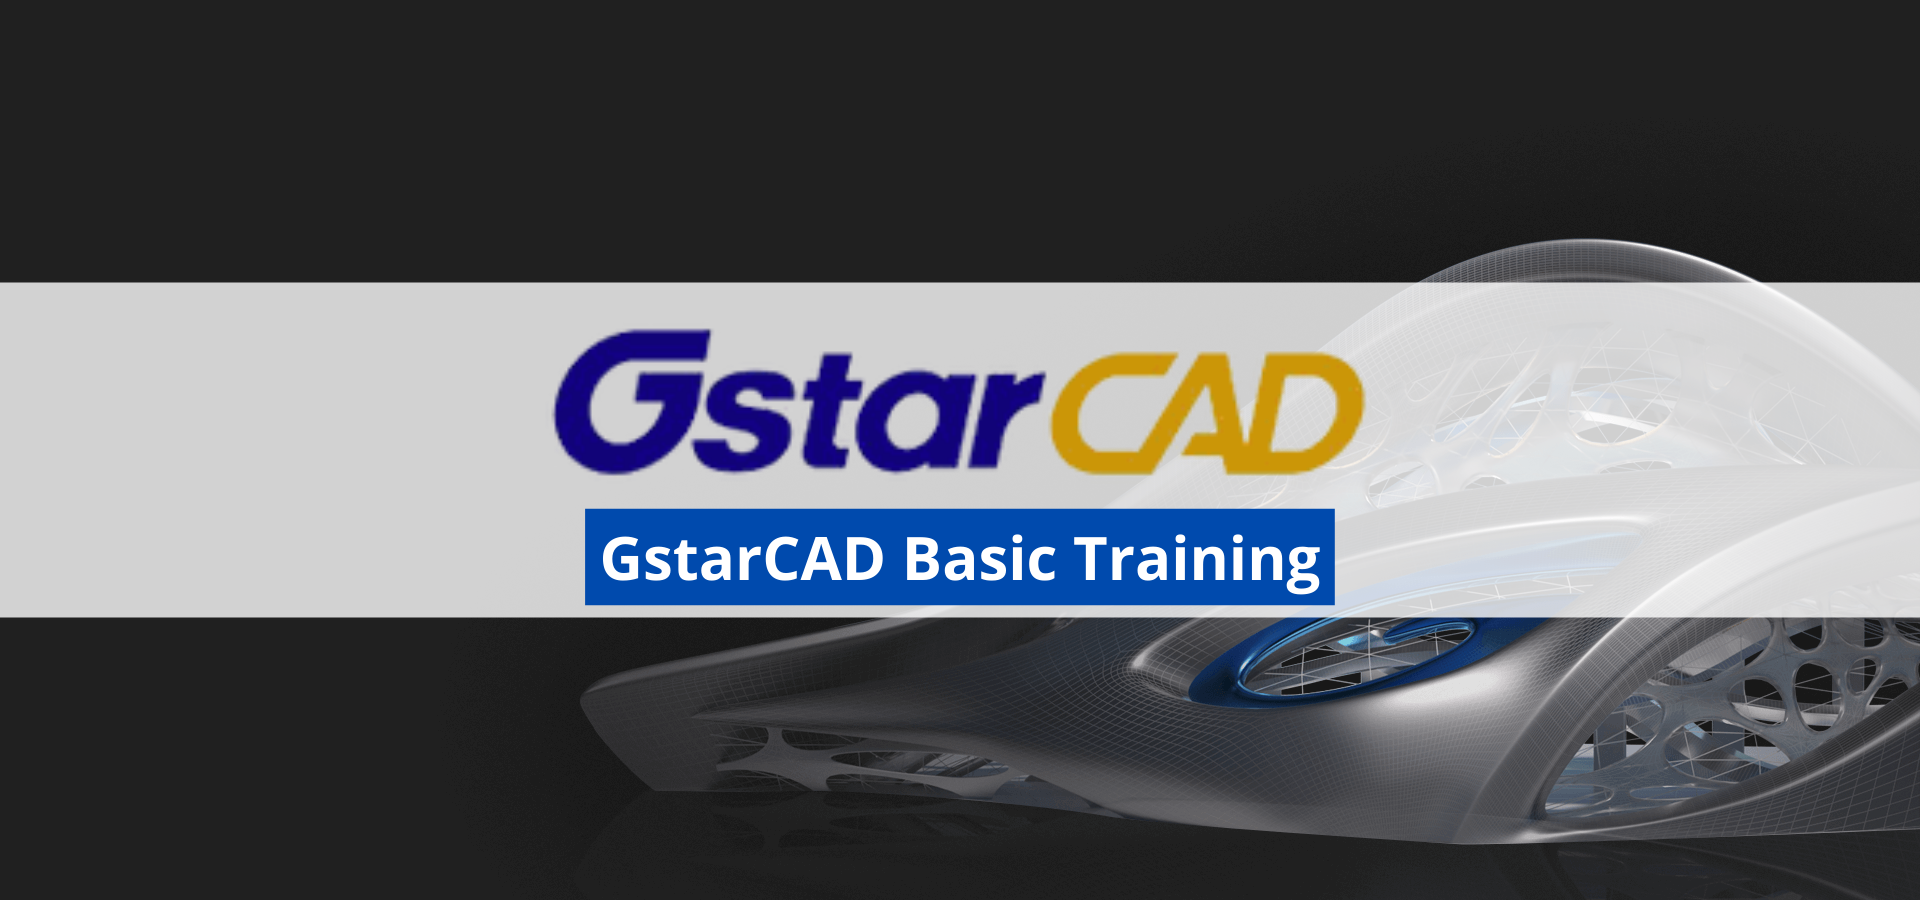 GstarCAD Basic Training Course